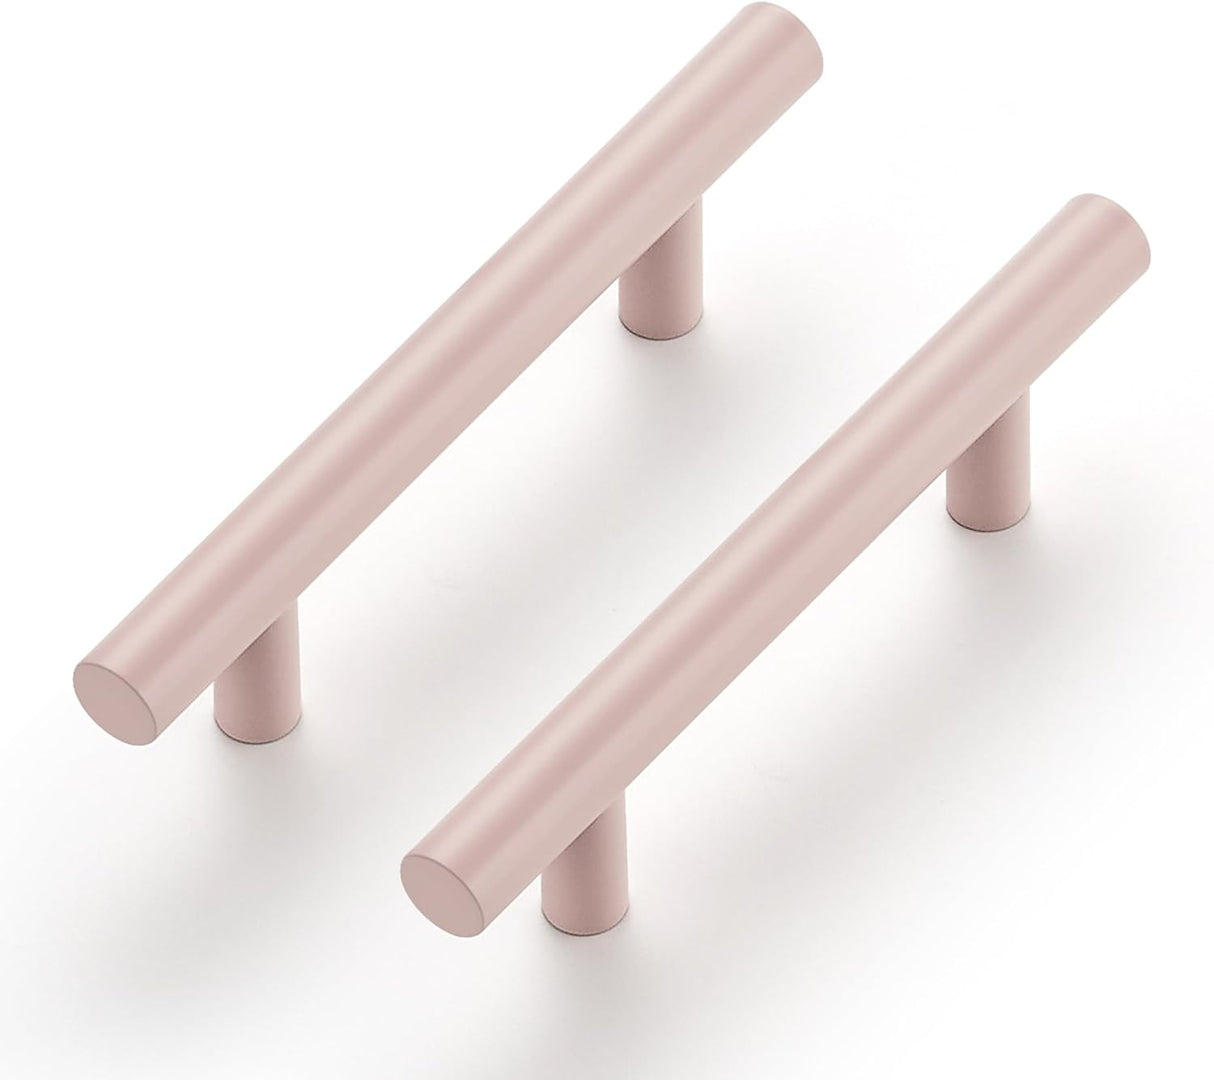 SABRE SELECT 5 pulgadas de largo con tiradores centrales de gabinete de 3 pulgadas (paquete de 5, rosa)